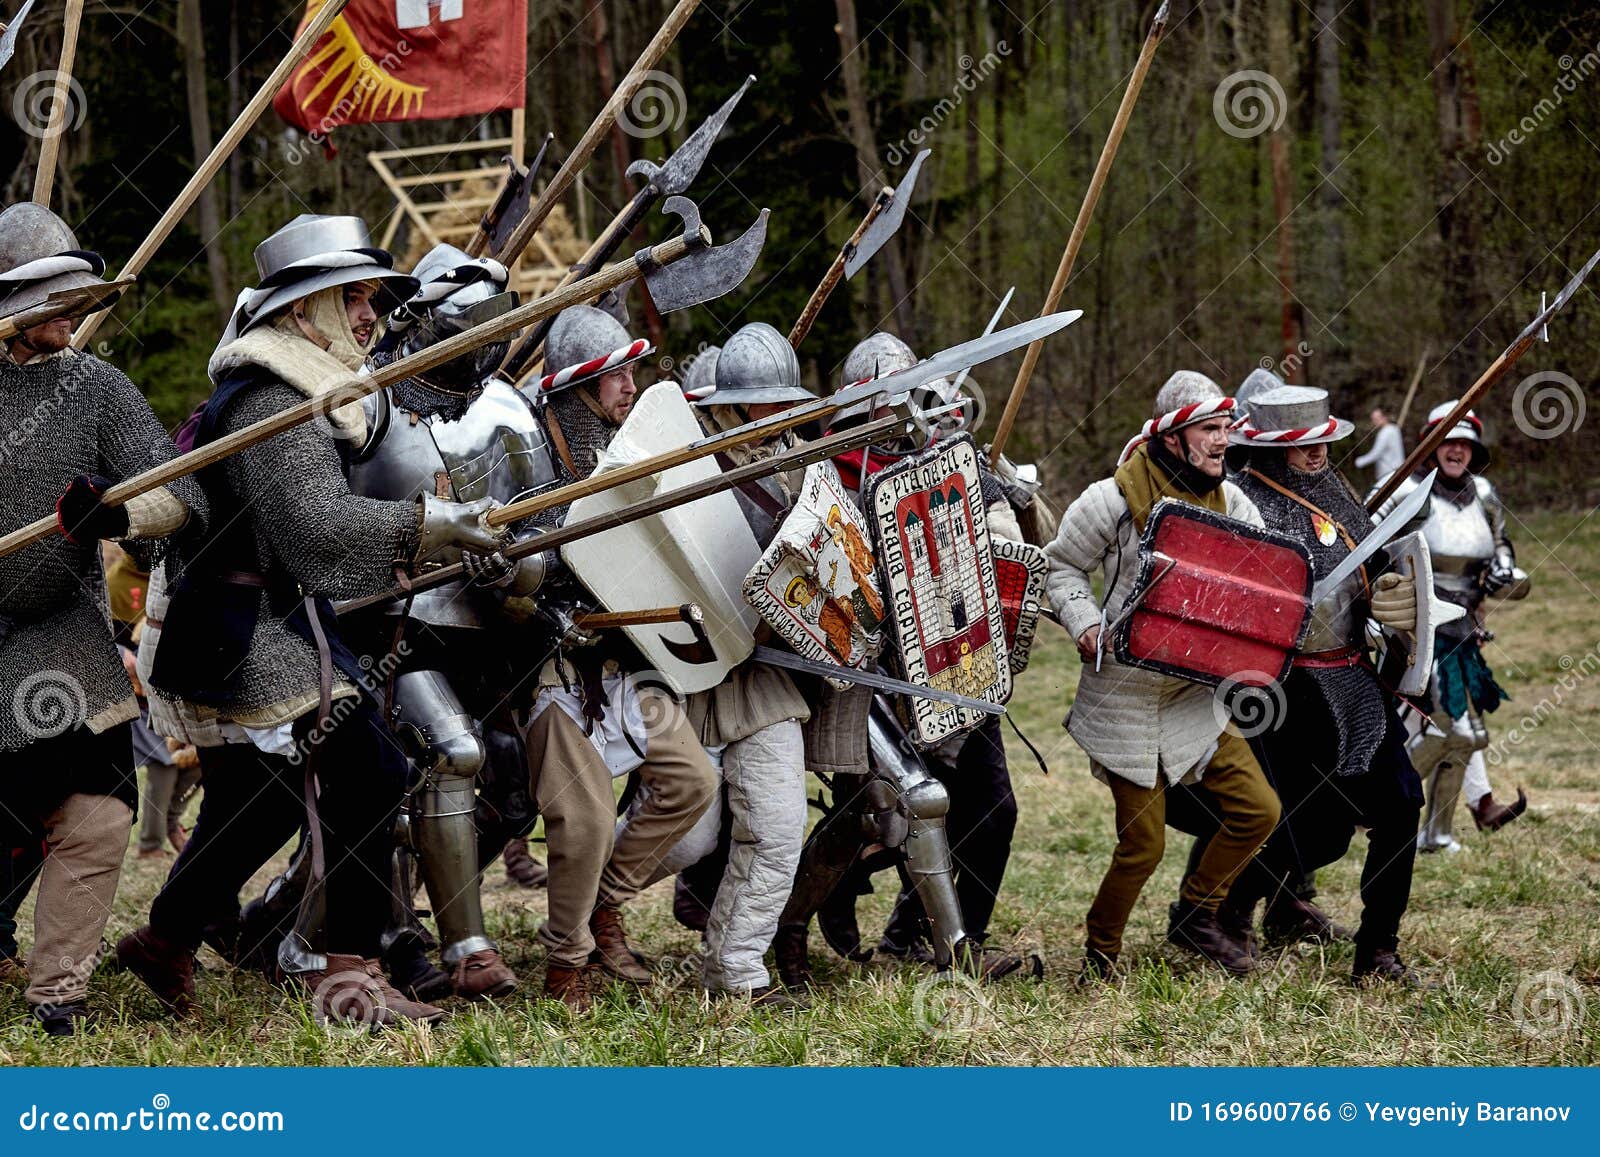 warrior-medieval-europe-medieval-battle-reconstruction-czech-republic-libusin-warrior-medieval-europe-medieval-battle-169600766.jpg